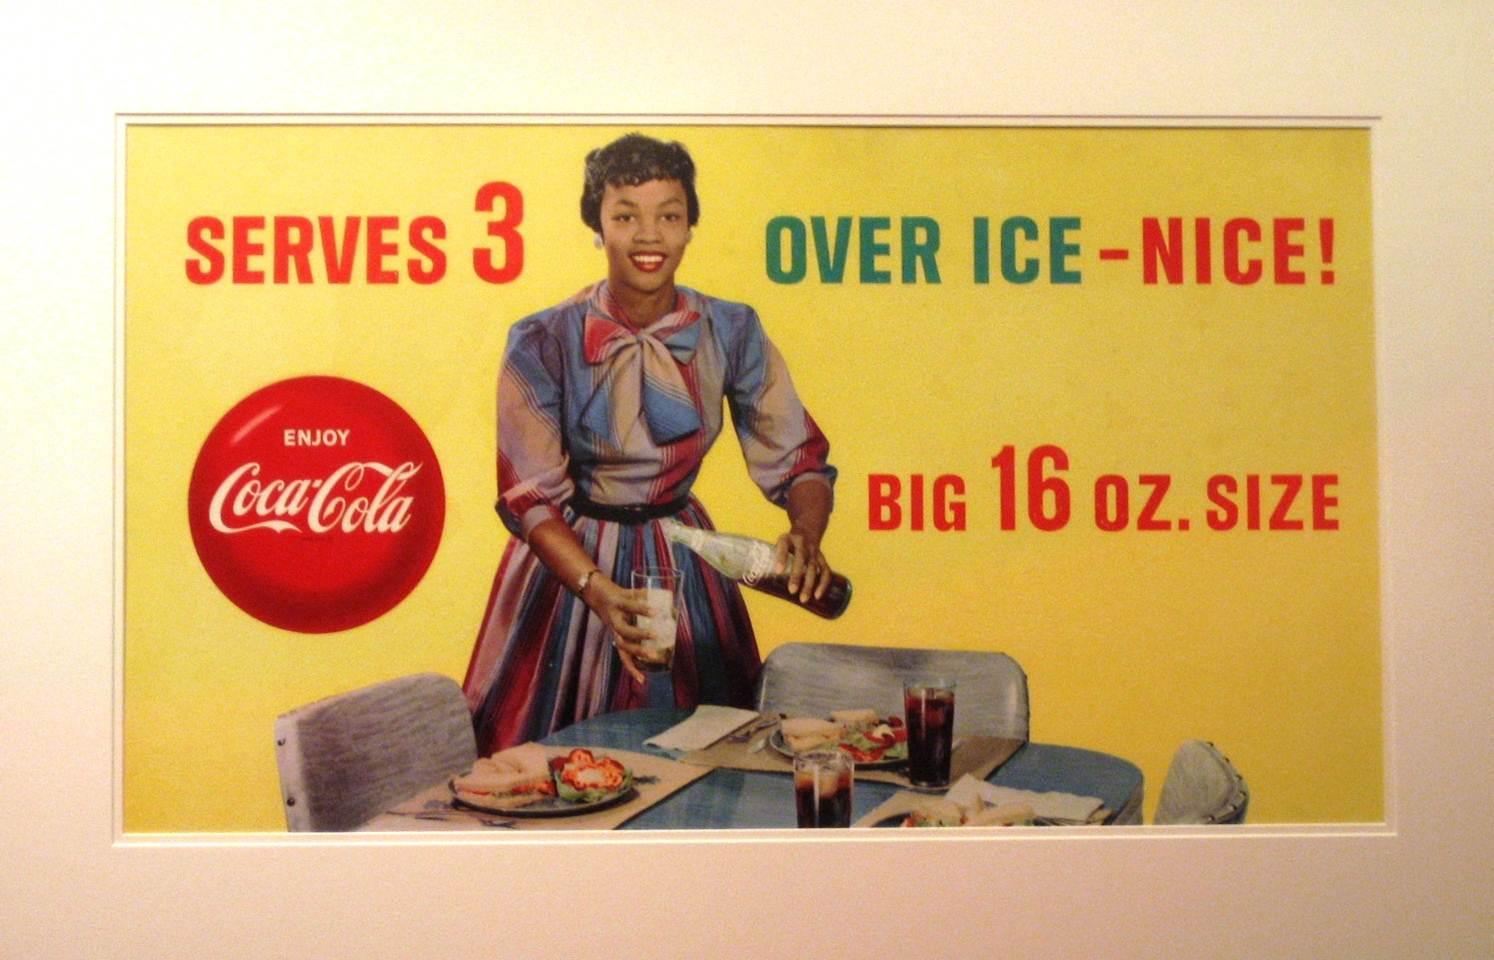 Retro 1950 Coca-Cola advertisement